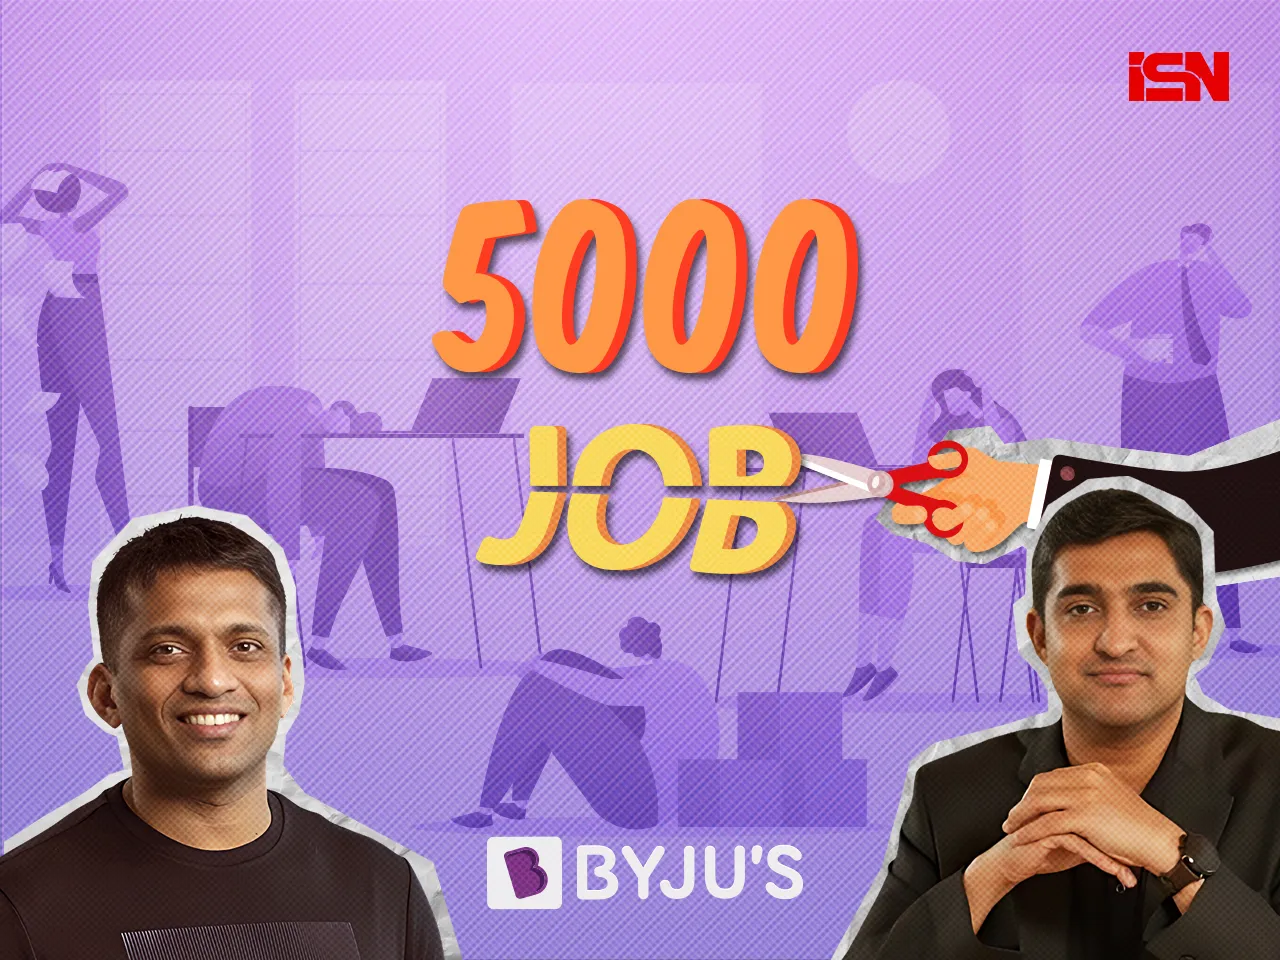 byju's 5000 job cut.jpg